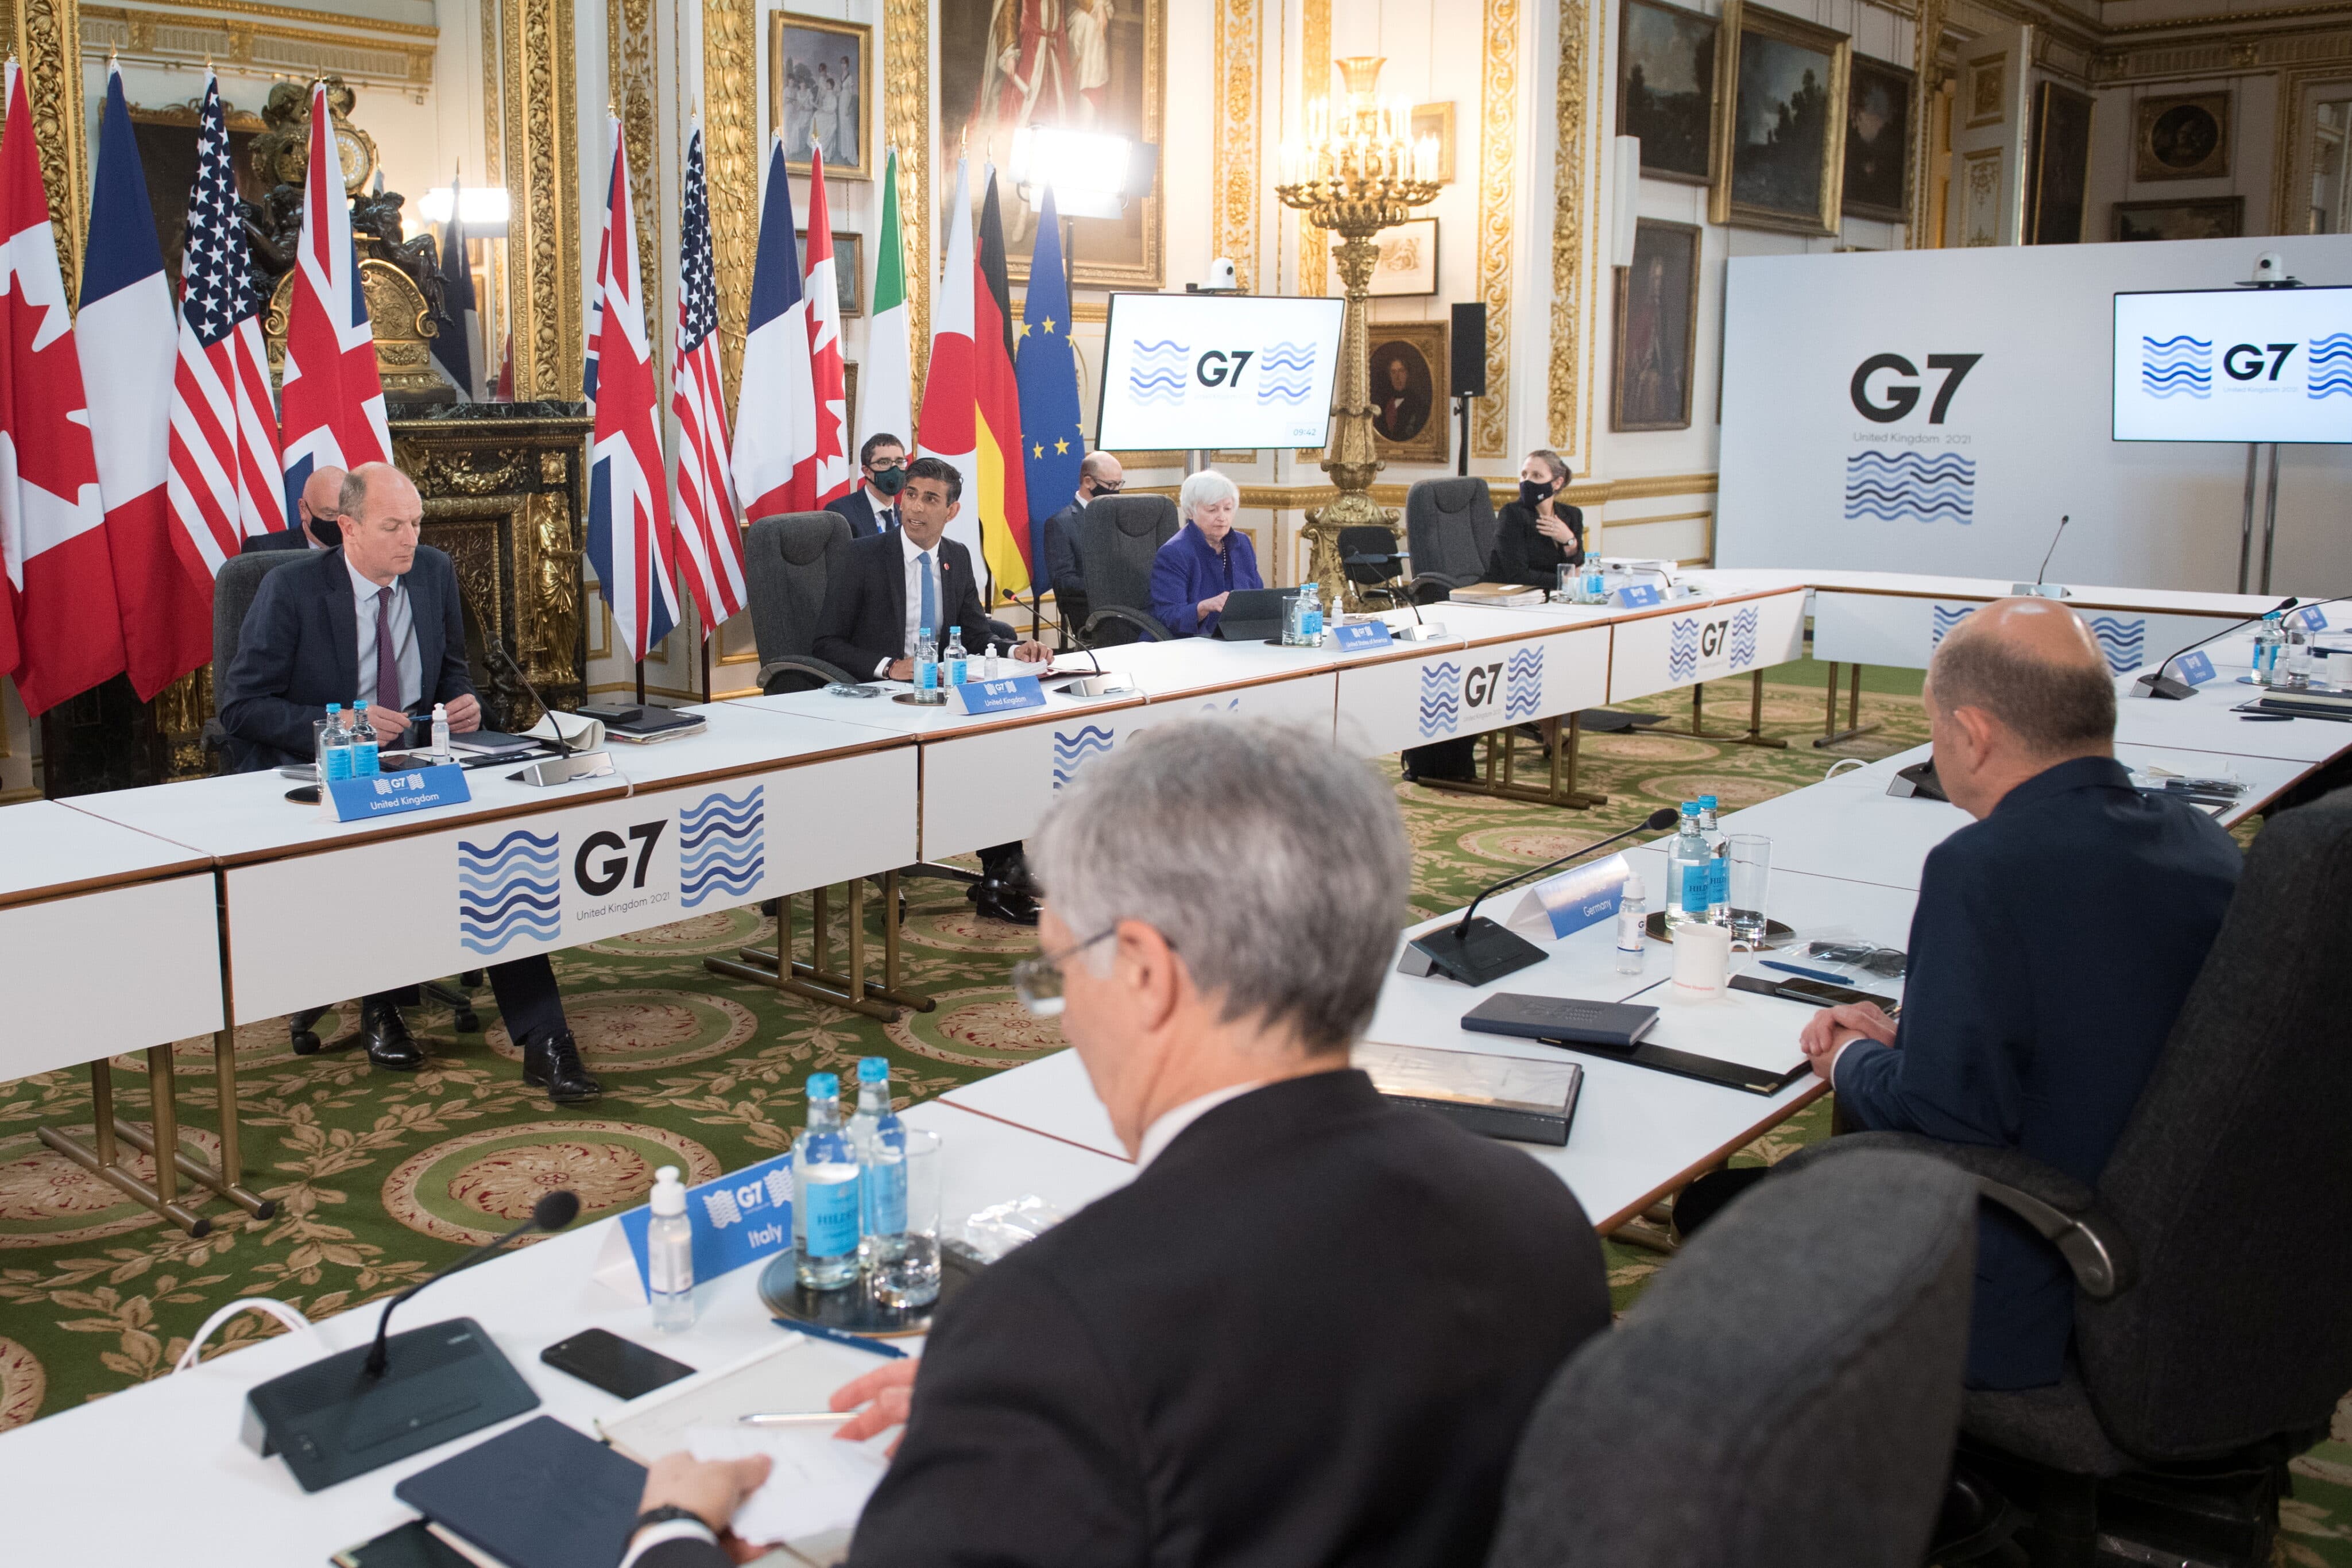 Representantes do G7